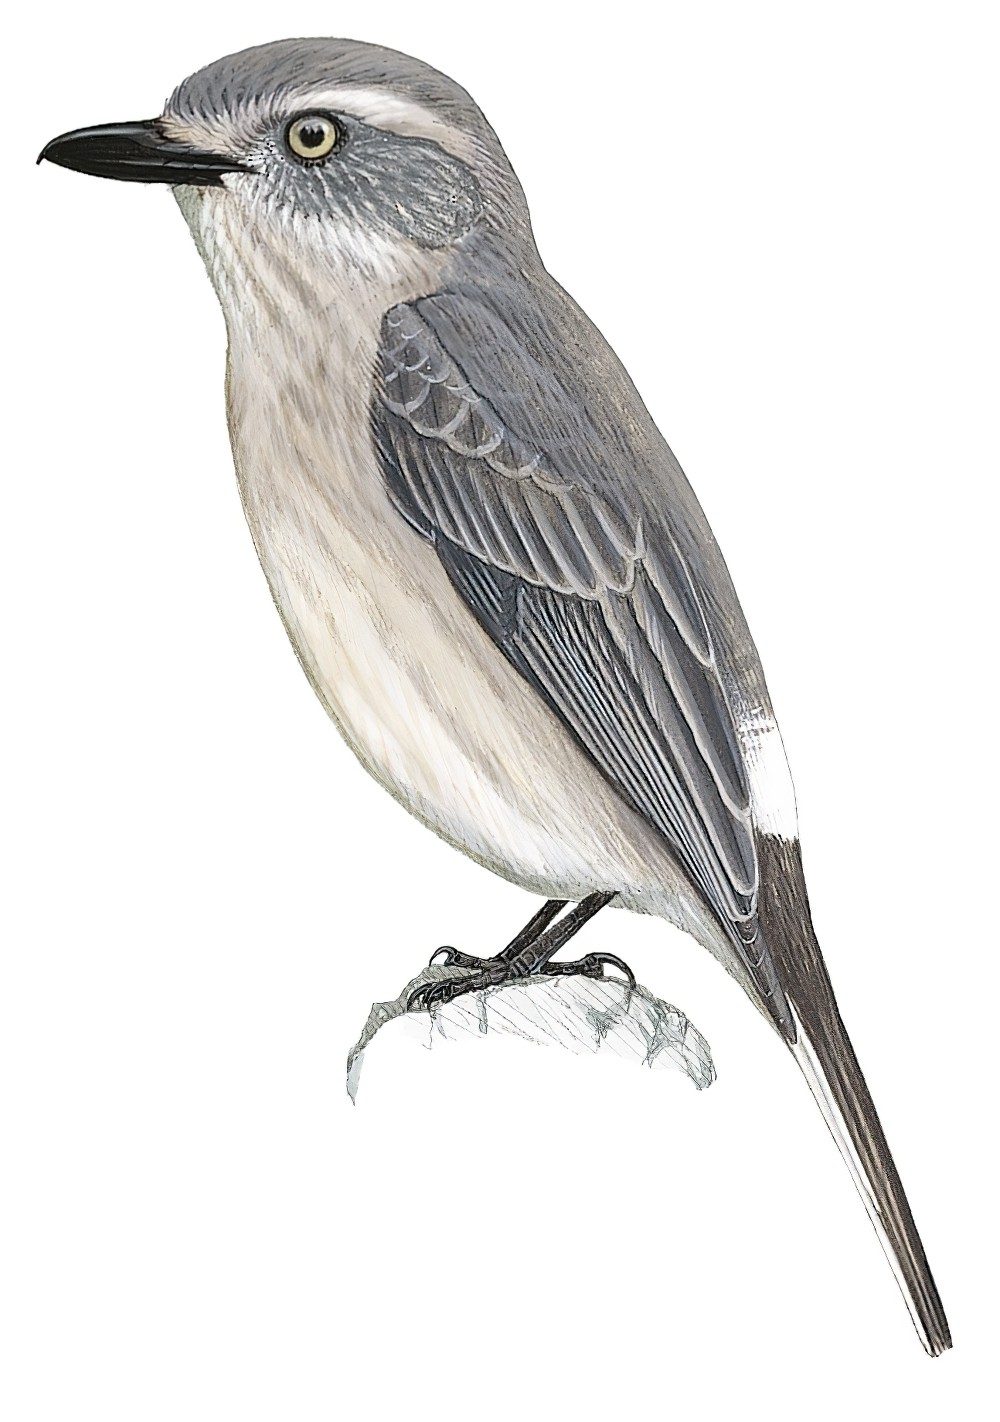 Sri Lanka Woodshrike / Tephrodornis affinis